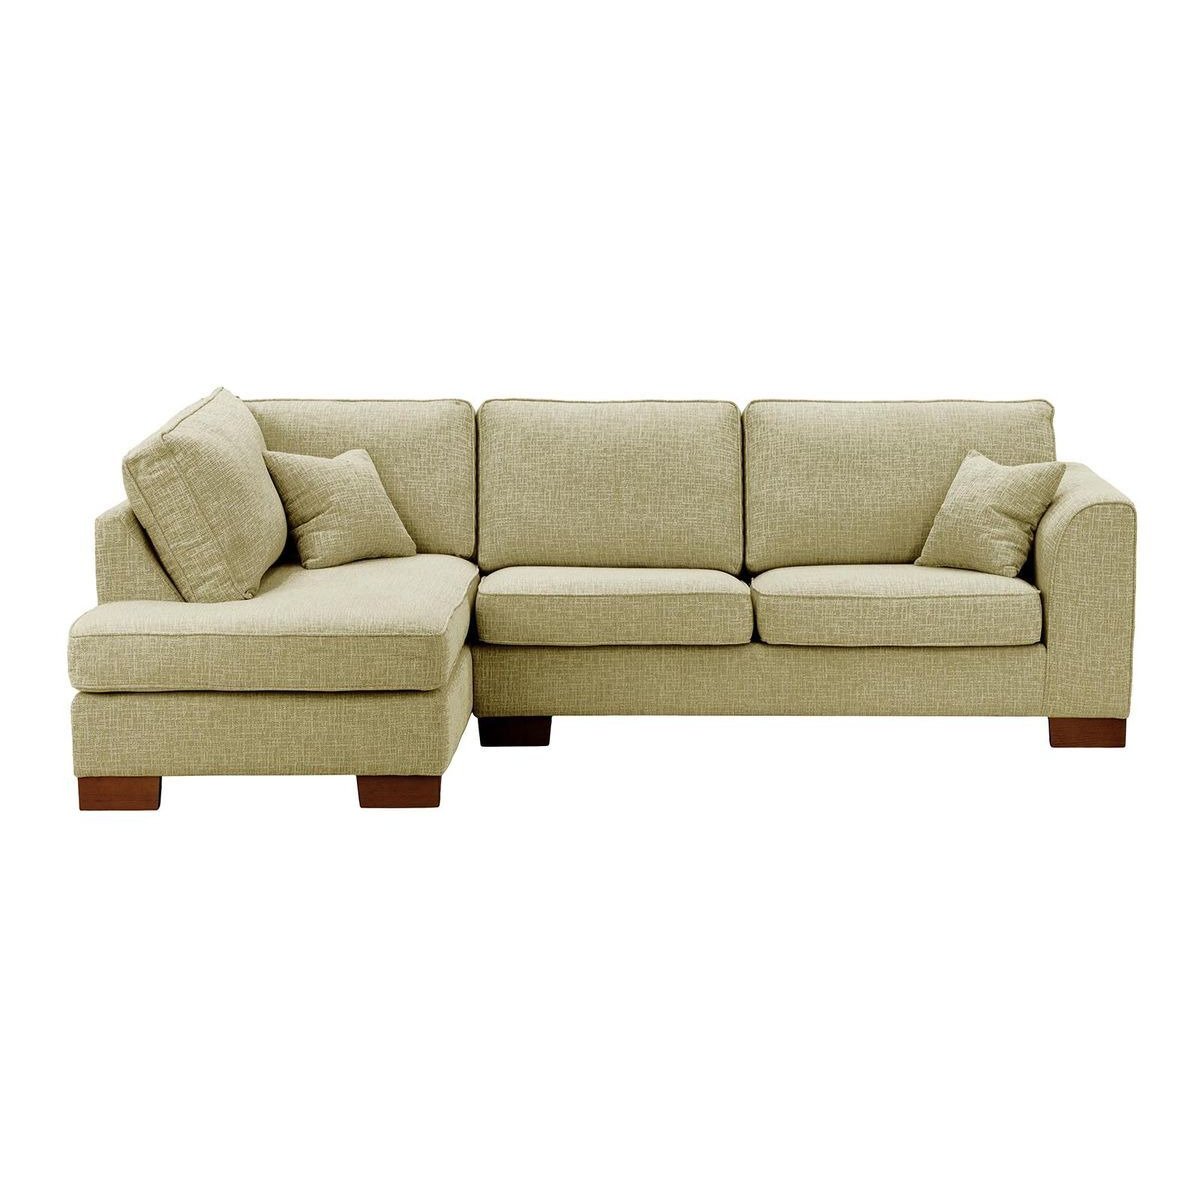 Avos Large Left Hand Corner Sofa, taupe, Leg colour: dark oak - image 1